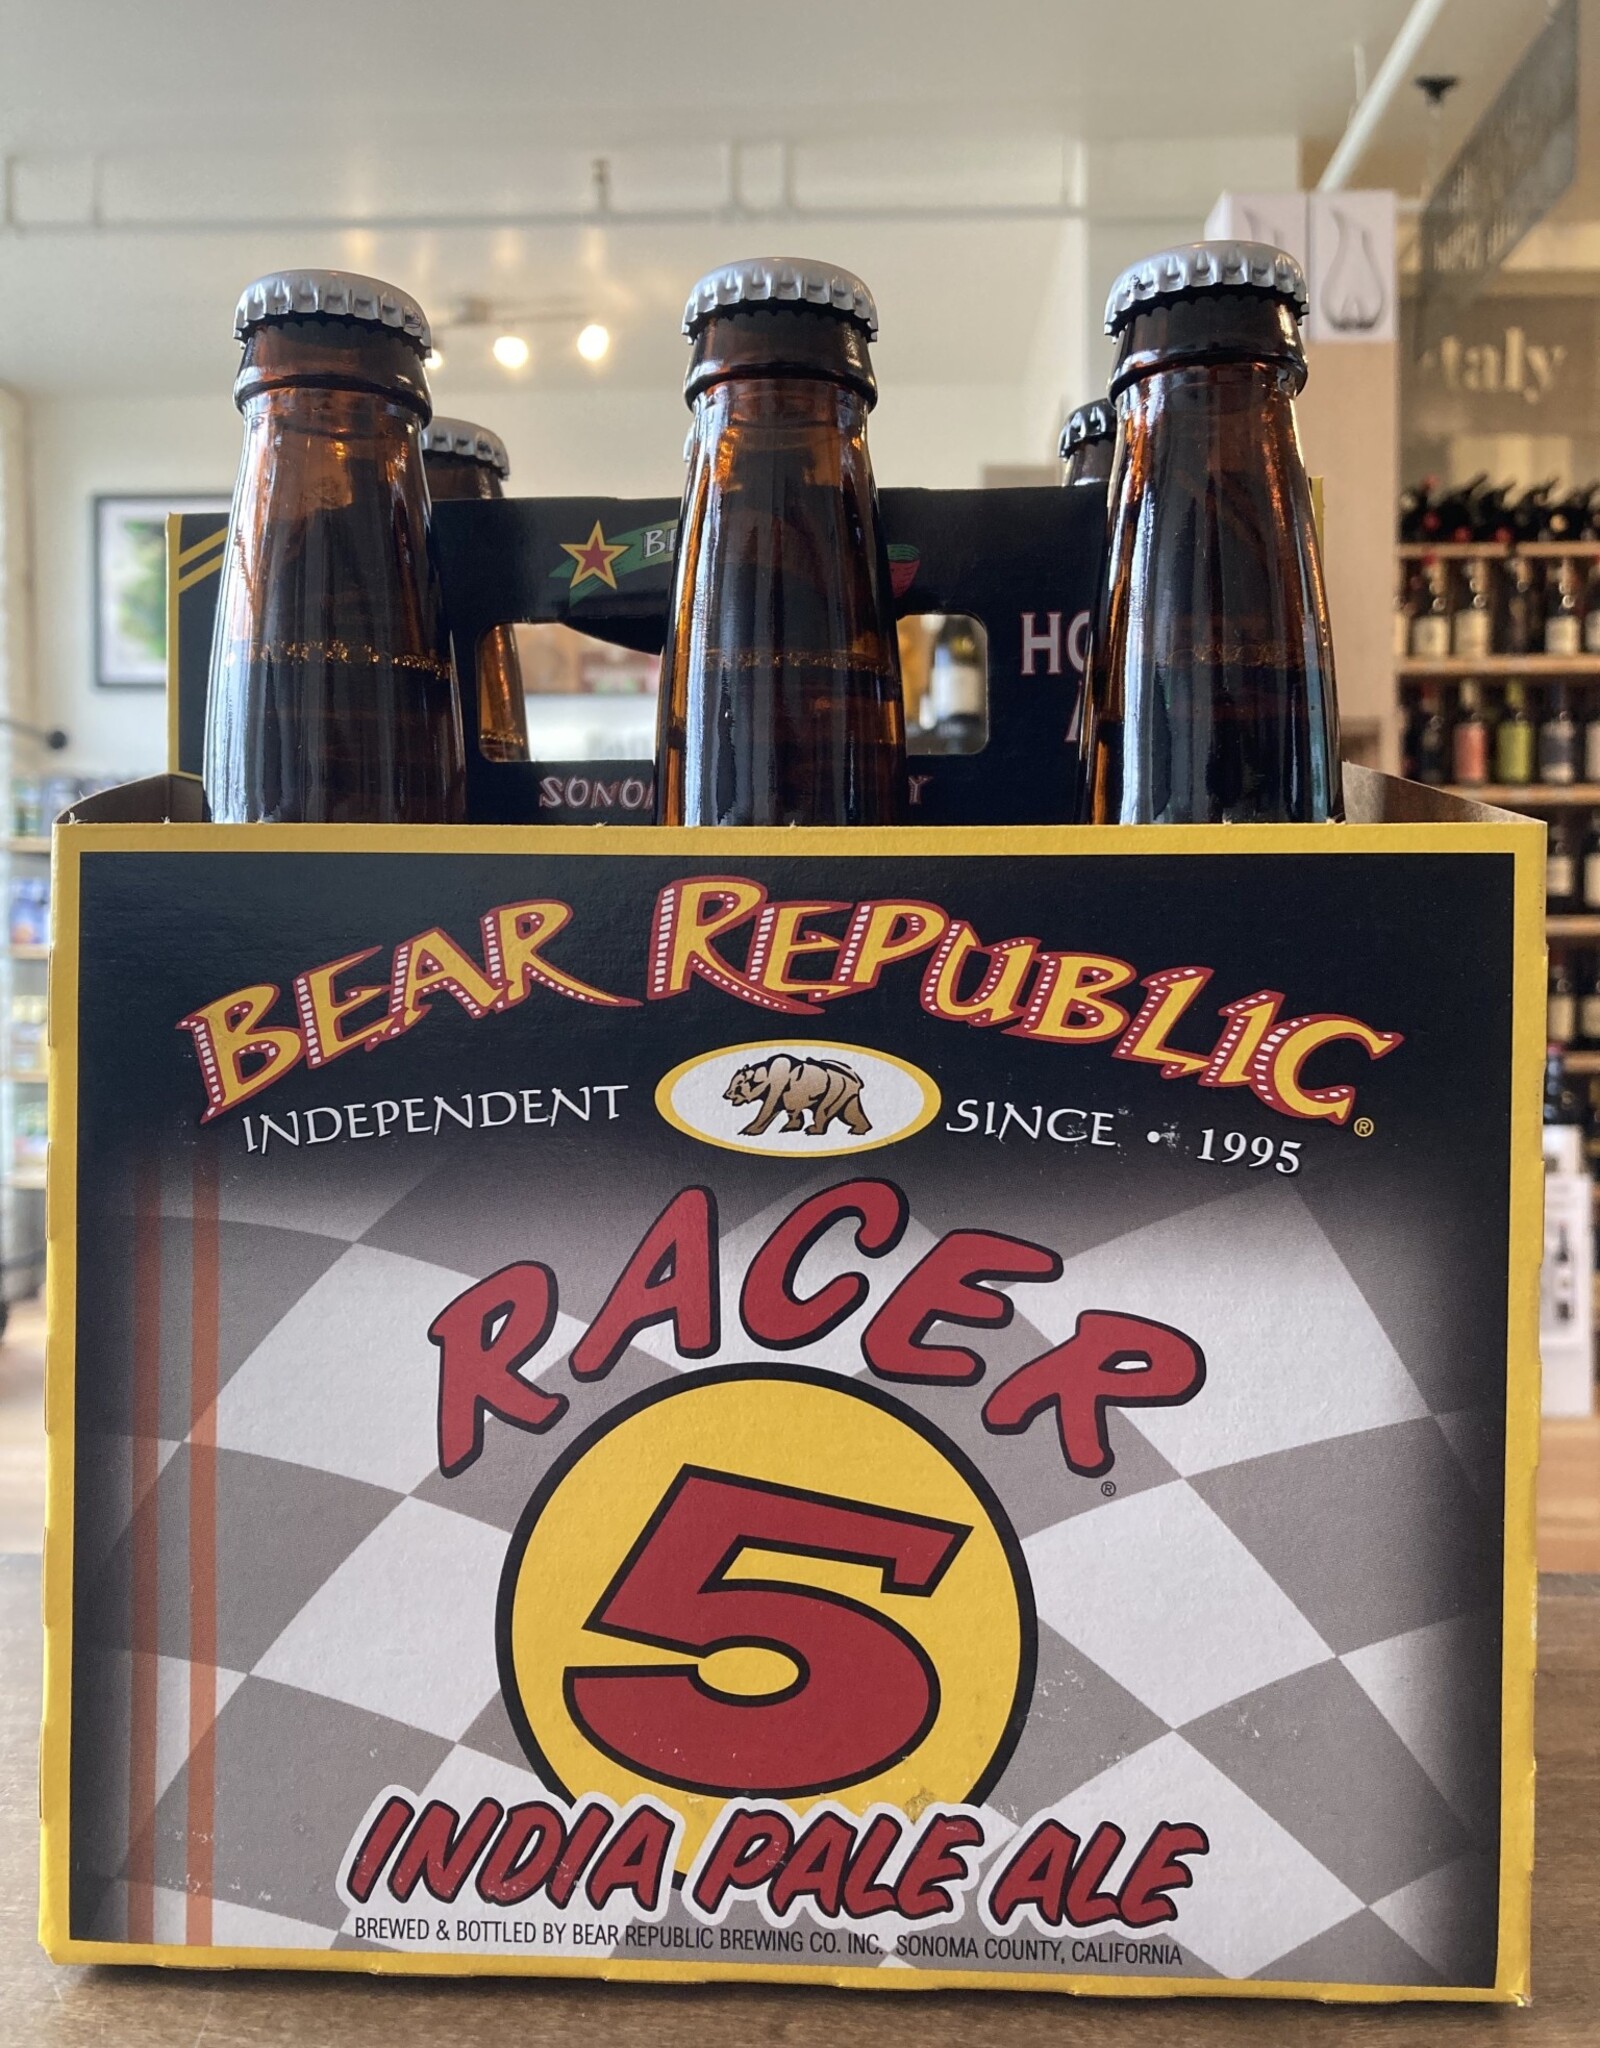 Bear Republic Racer 5 IPA 6, pk bottles, California